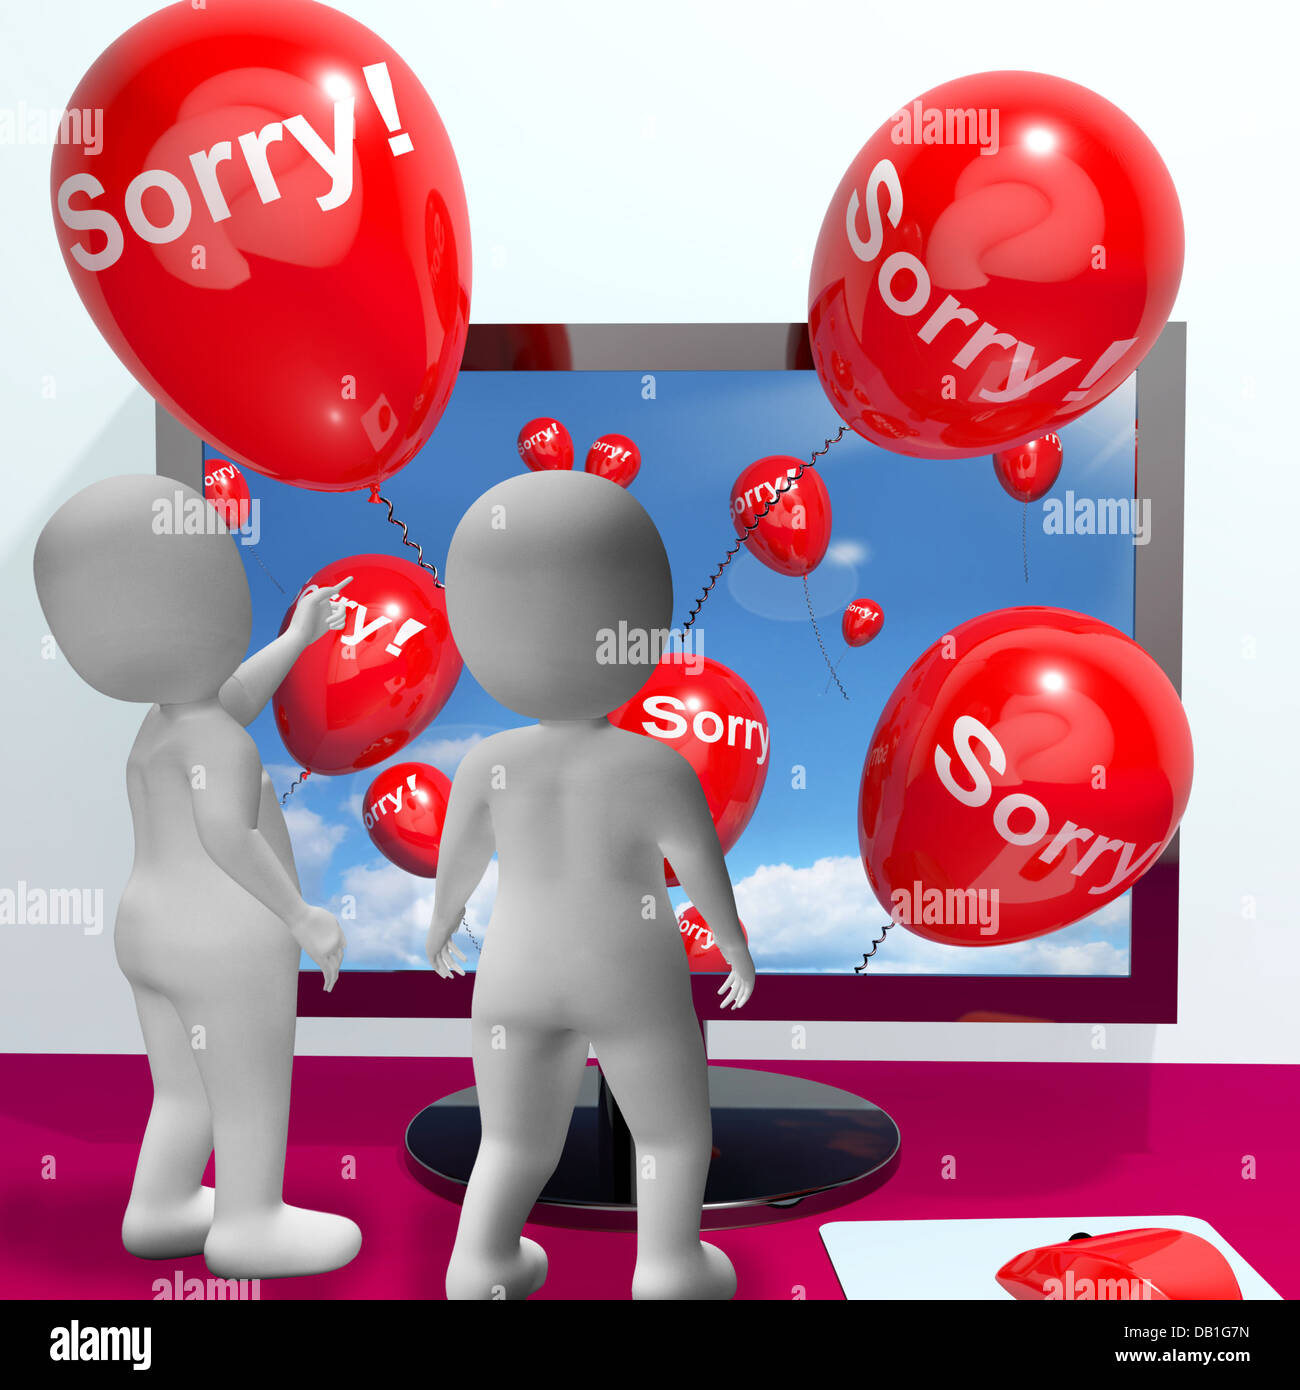 Tut mir leid Ballons von Computer Online-Entschuldigung oder Reue zeigen Stockfoto